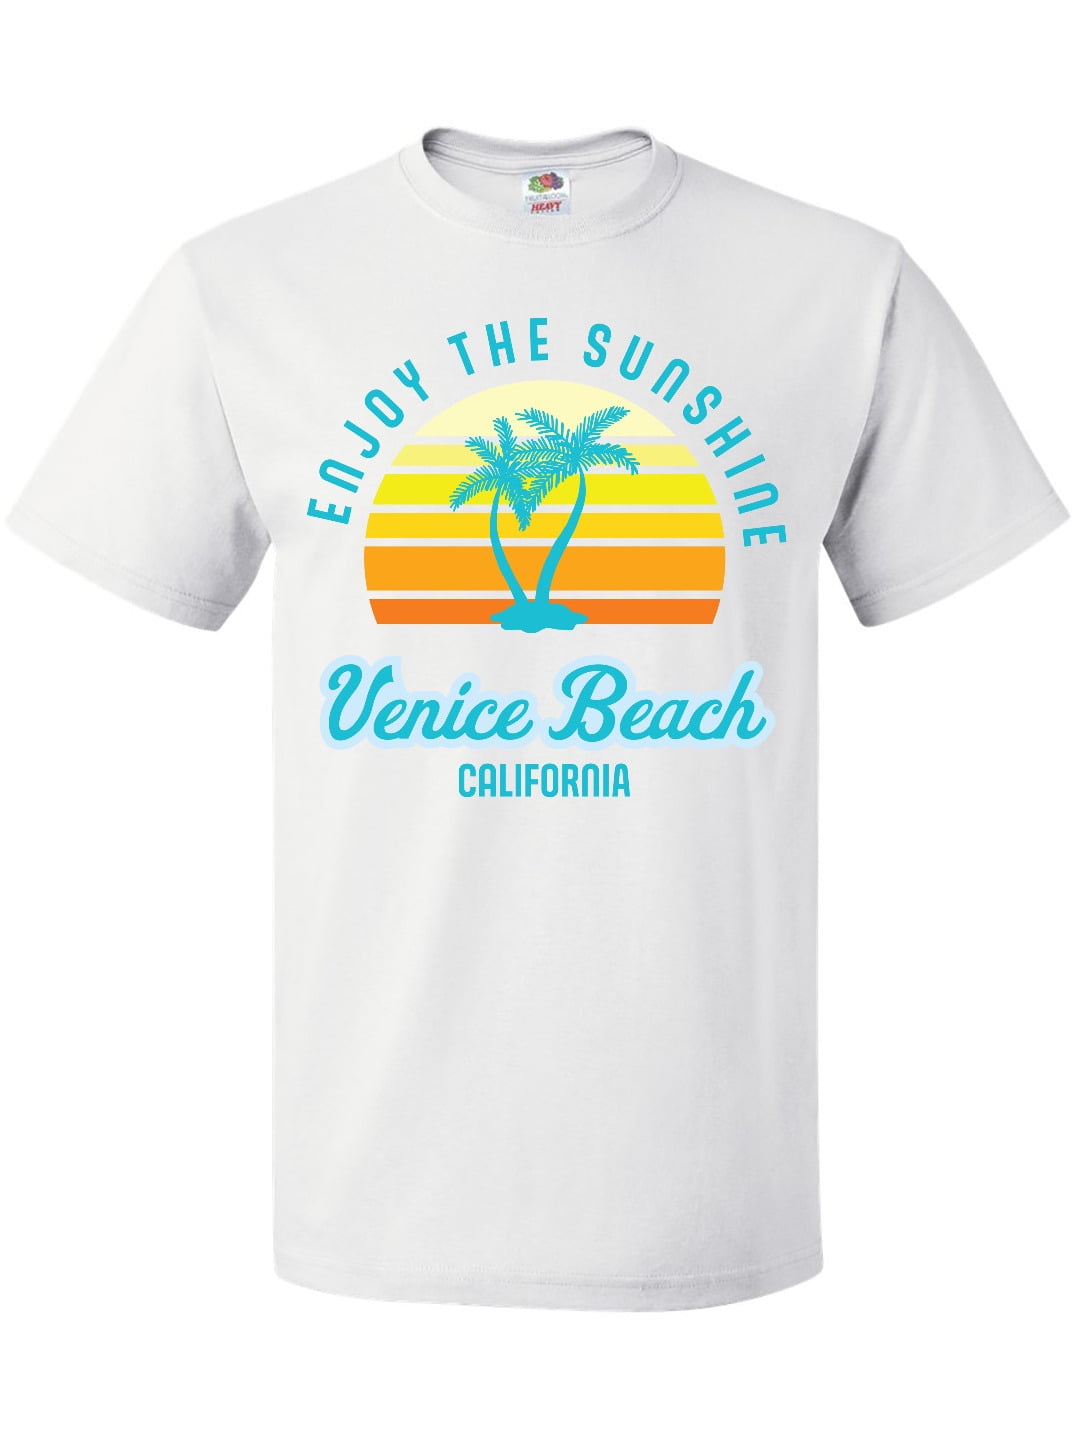 the in Blue T-Shirt Summer California Beach Enjoy Venice Sunshine Inktastic